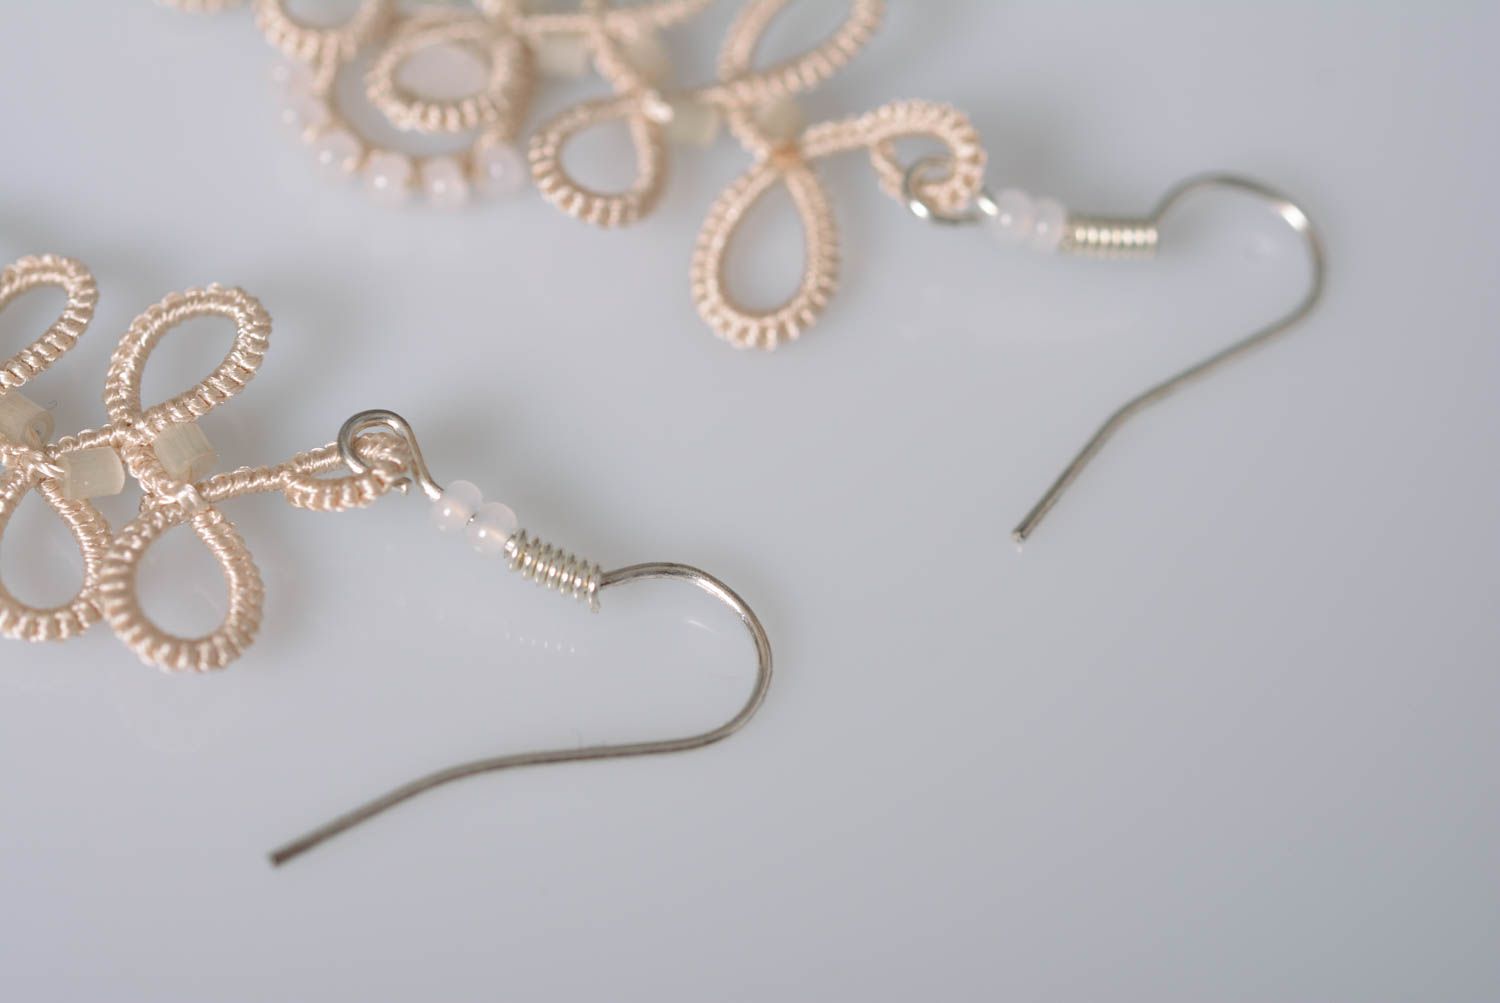 Handmade earrings designer jewelry fashion accessories dangling earrings photo 5